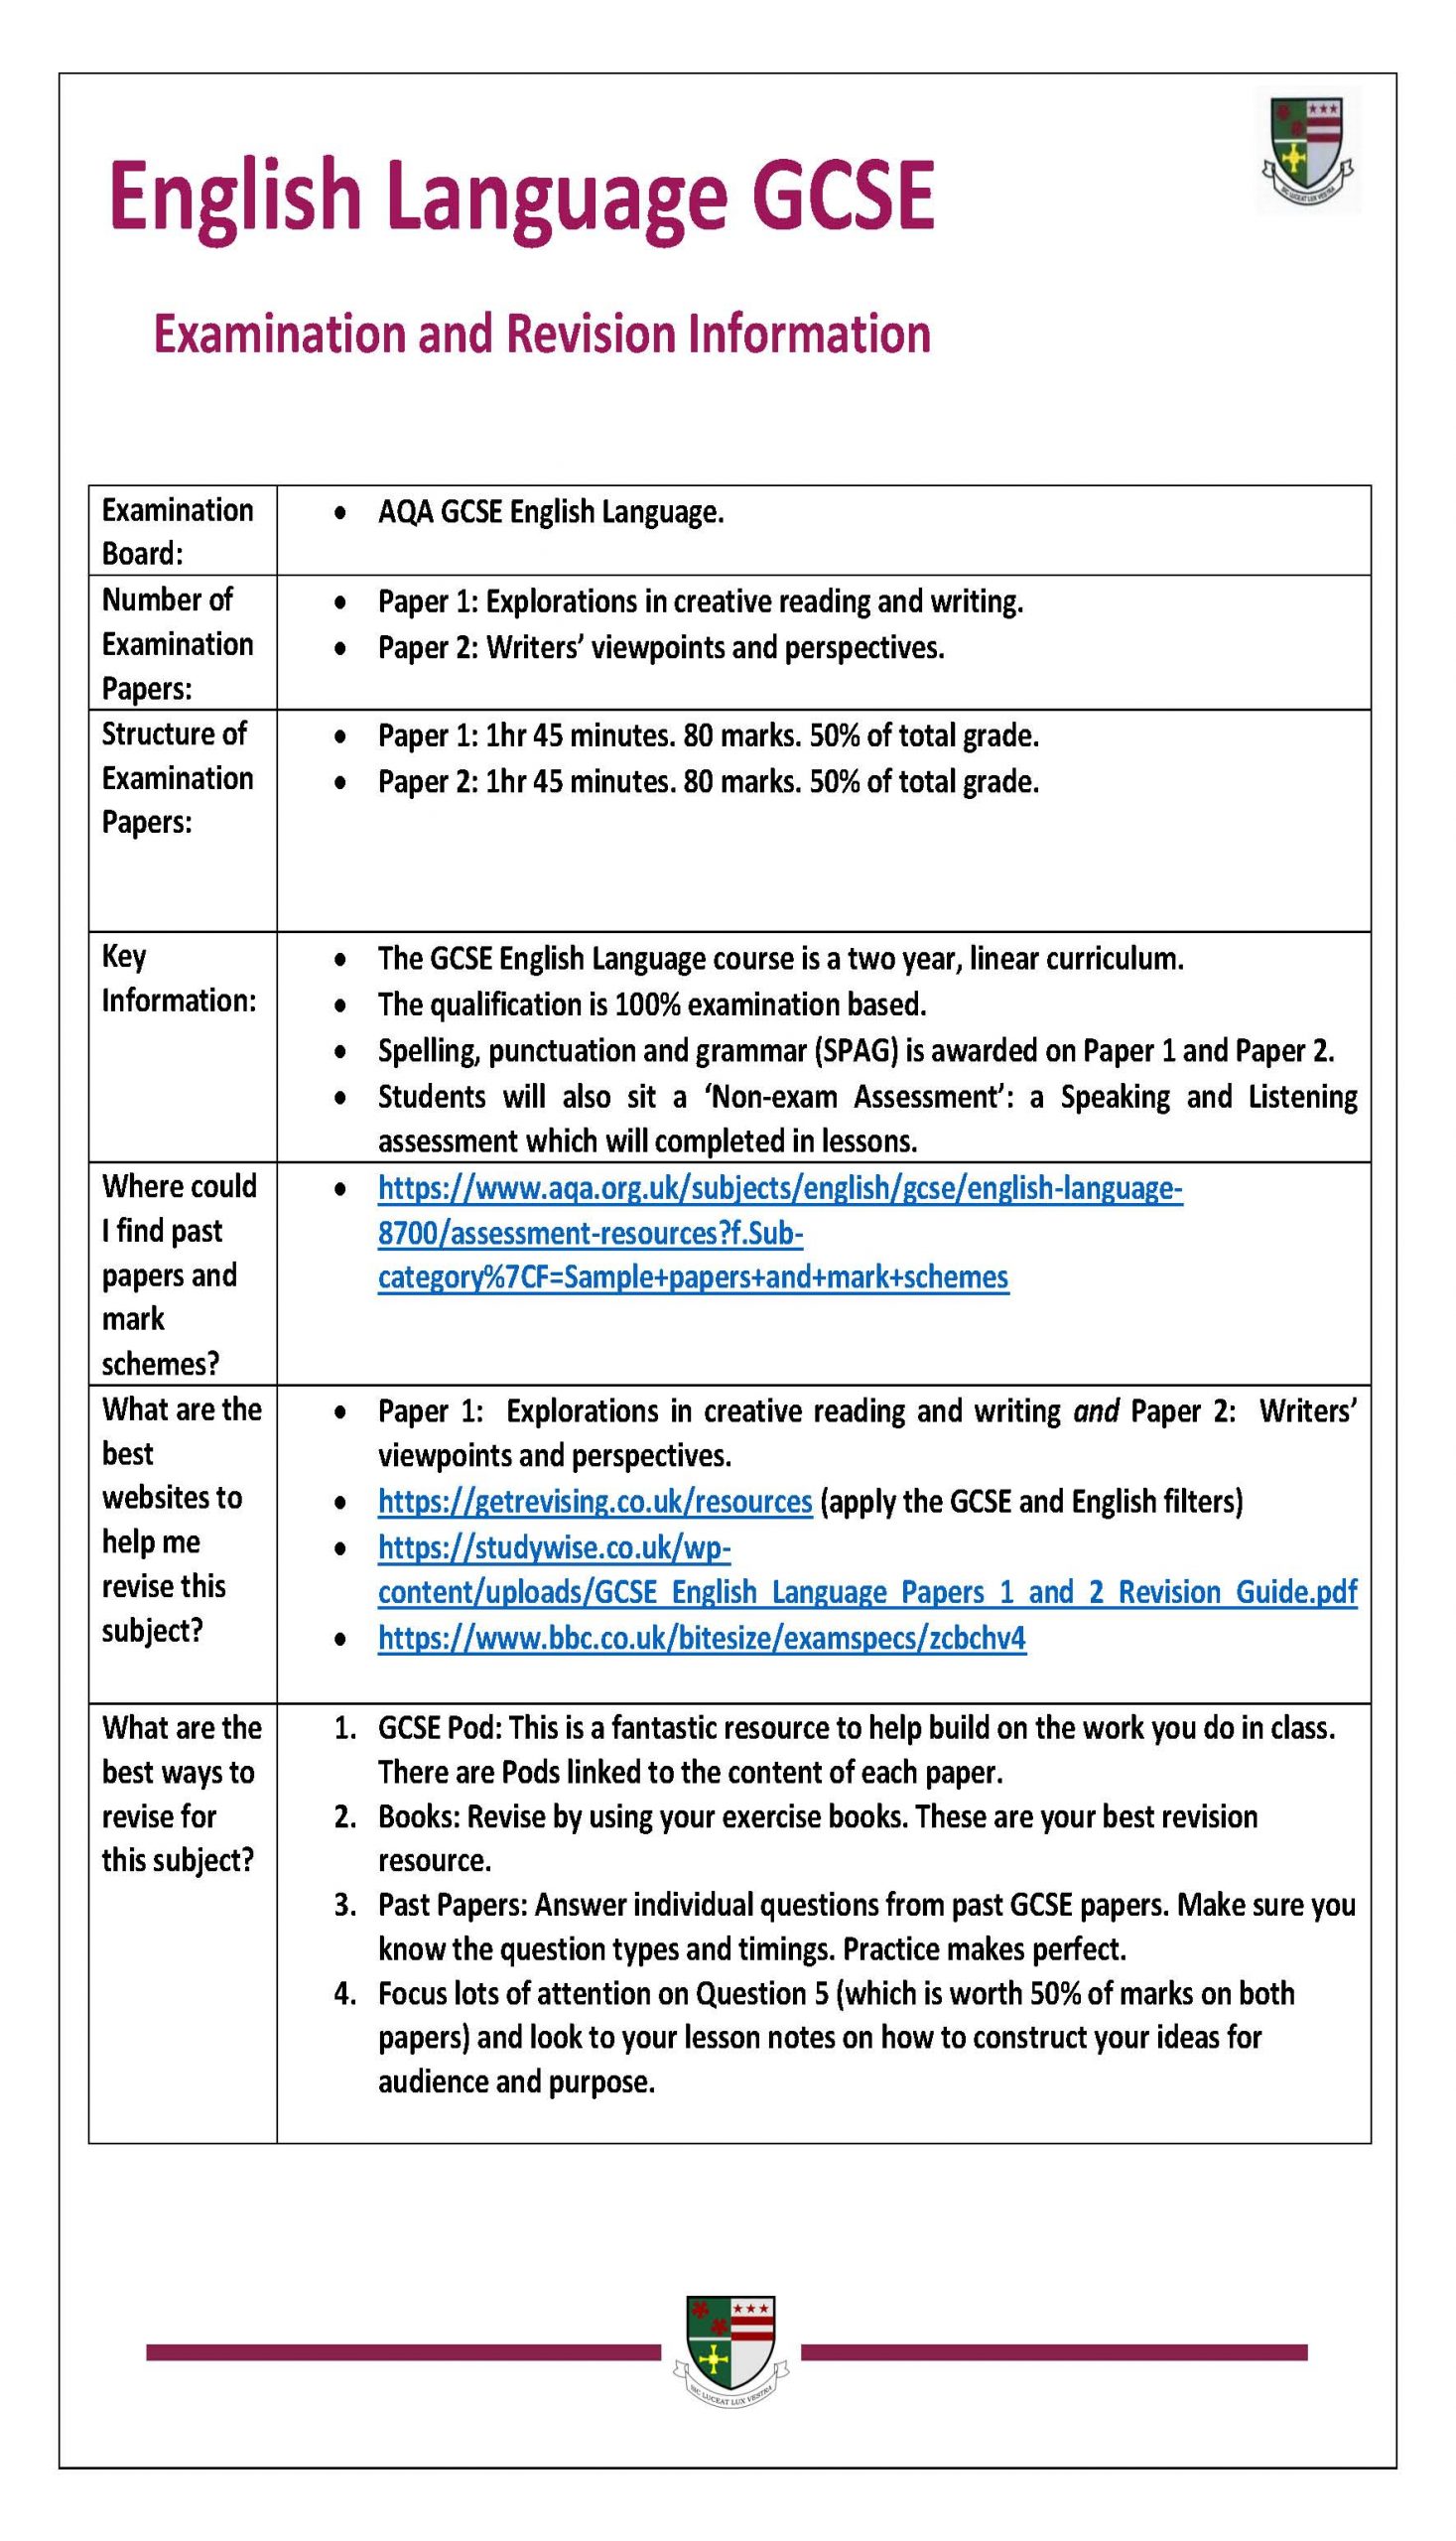 english-language-revision-sheet-2020-21-st-robert-of-newminster